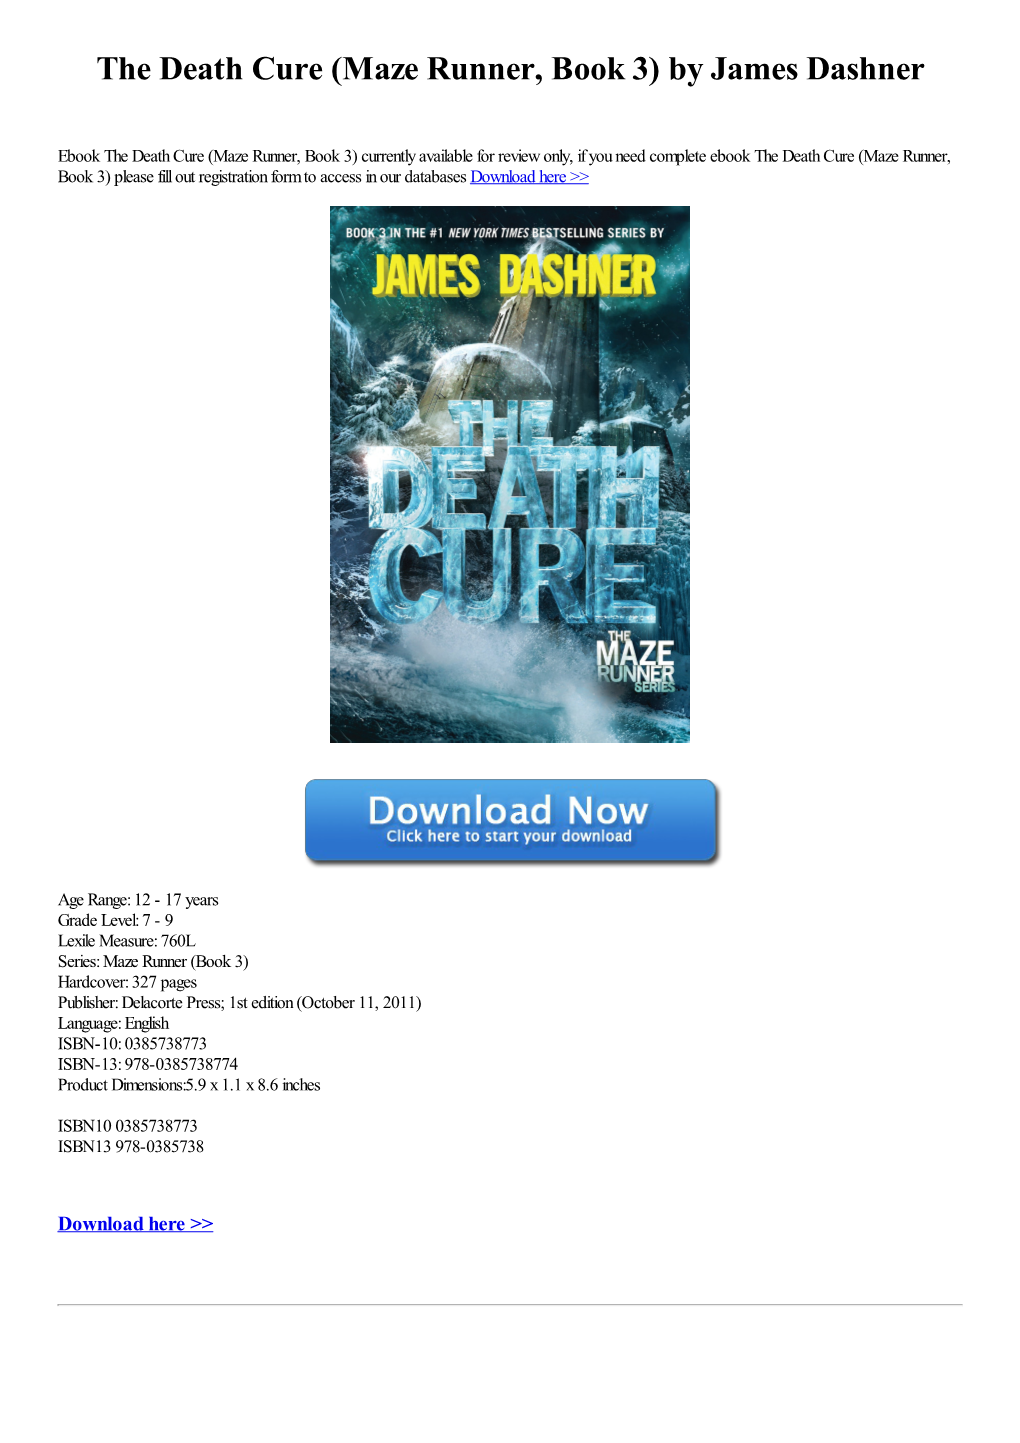 The Death Cure (Maze Runner, Book 3) by James Dashner [PDF]